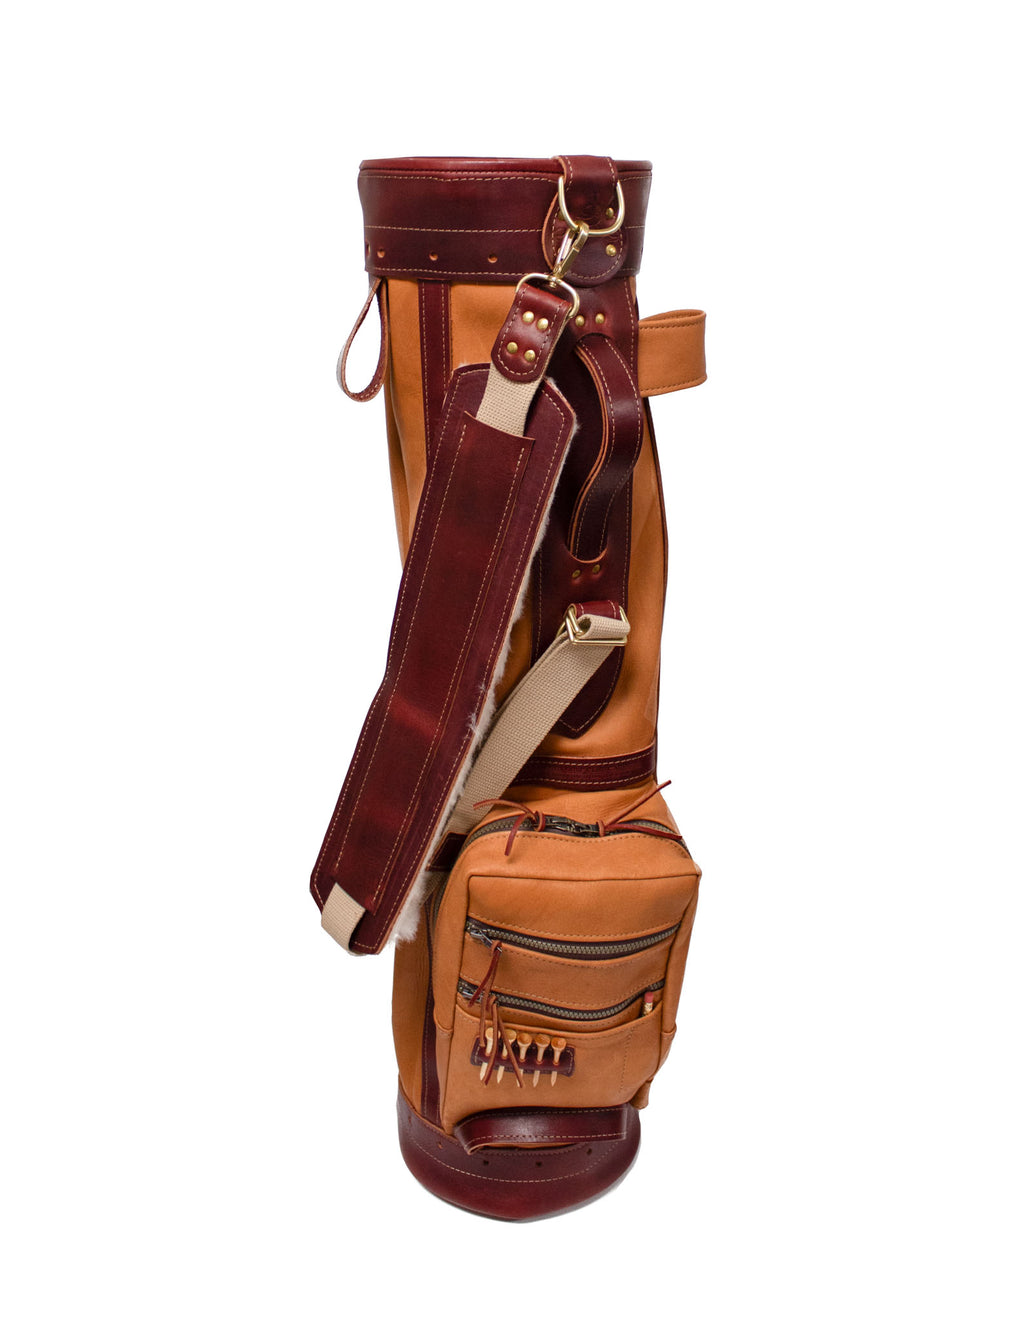 deerskin and burgundy leather golf bag 